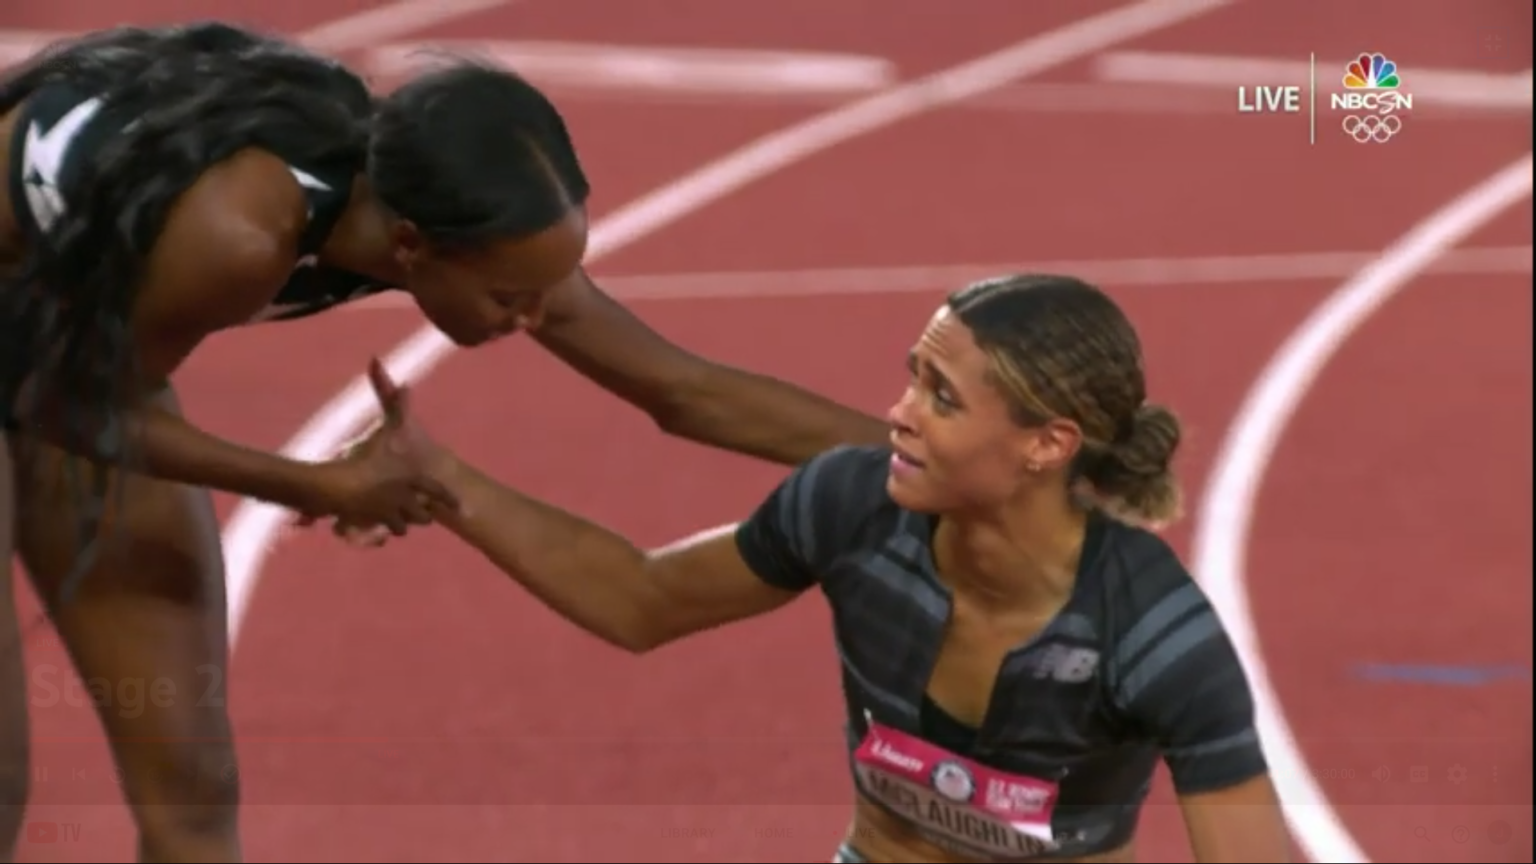 Sydney McLaughlin Runs 51.90 at 2020 US Olympic Trials to Break 400